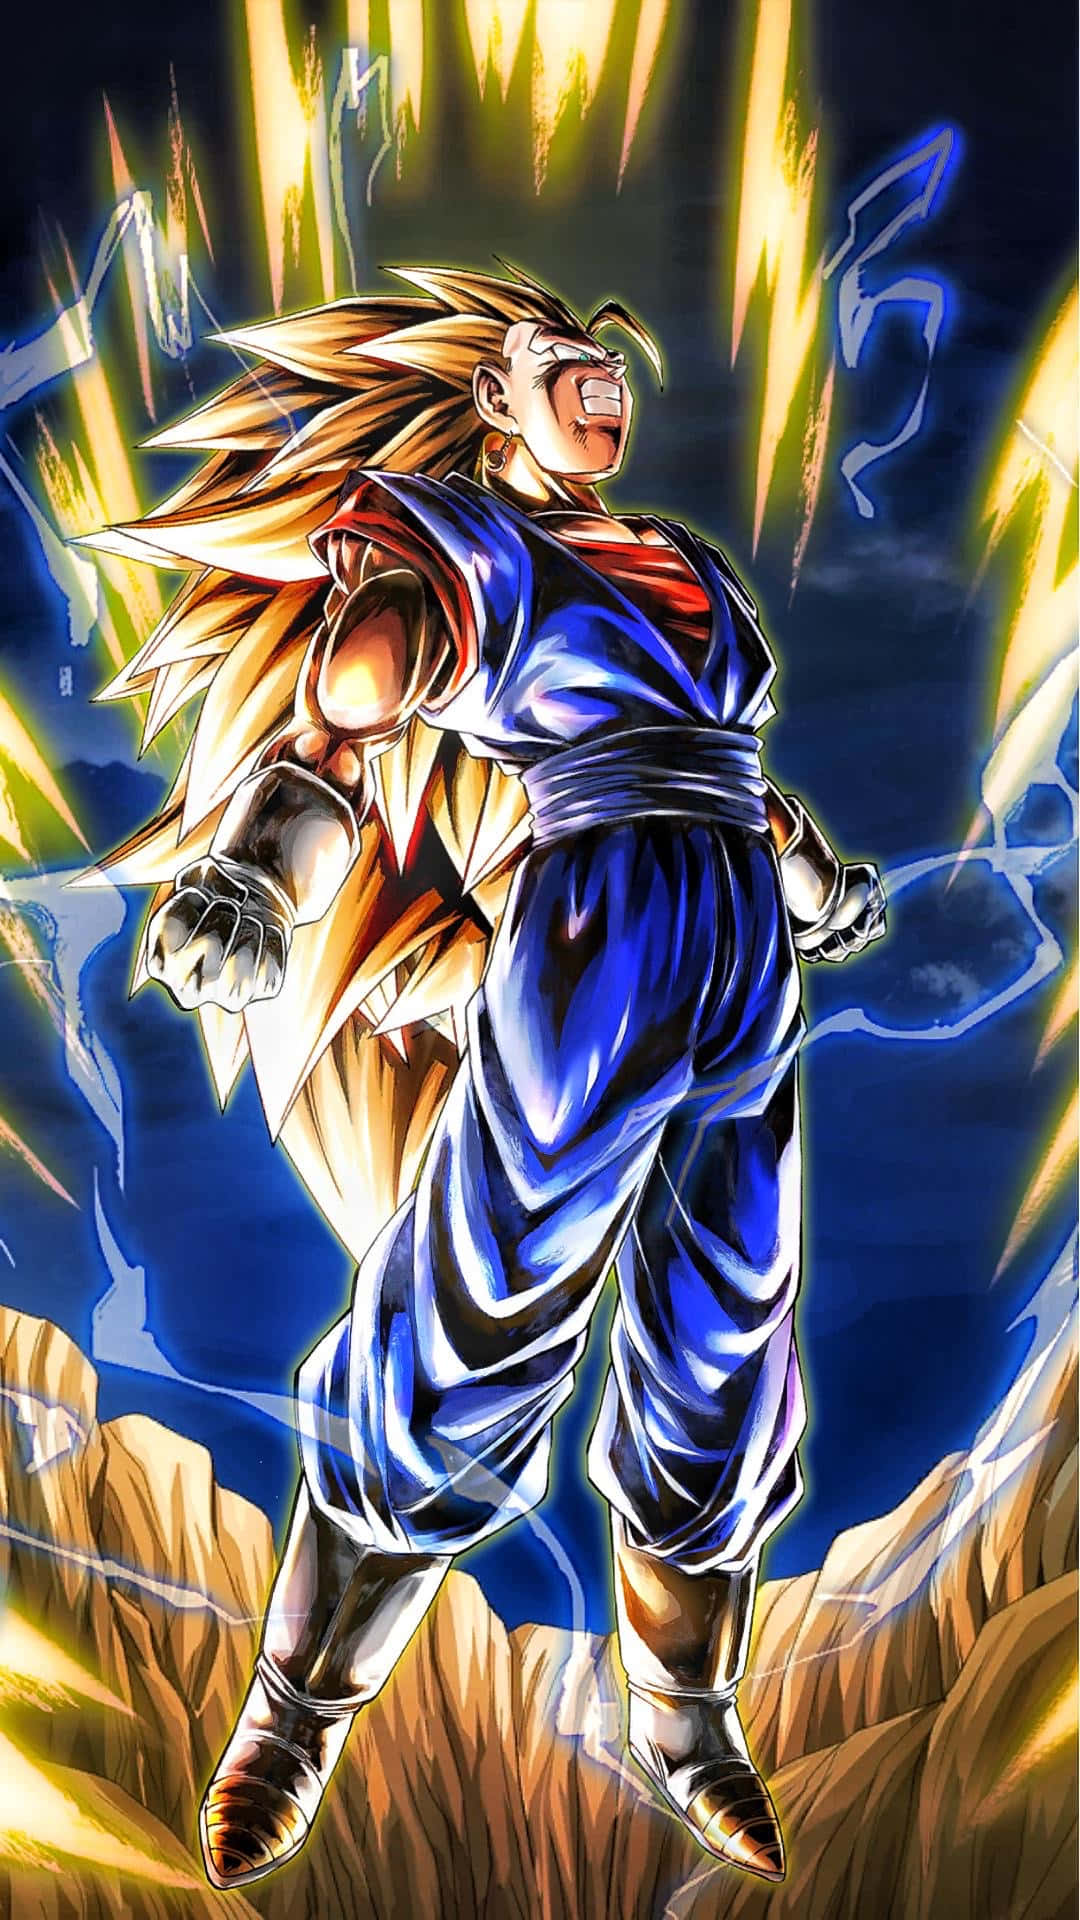 Download The powerful Super Saiyan 3 form of Goku Wallpaper, foto do goku  super sayajin 3 